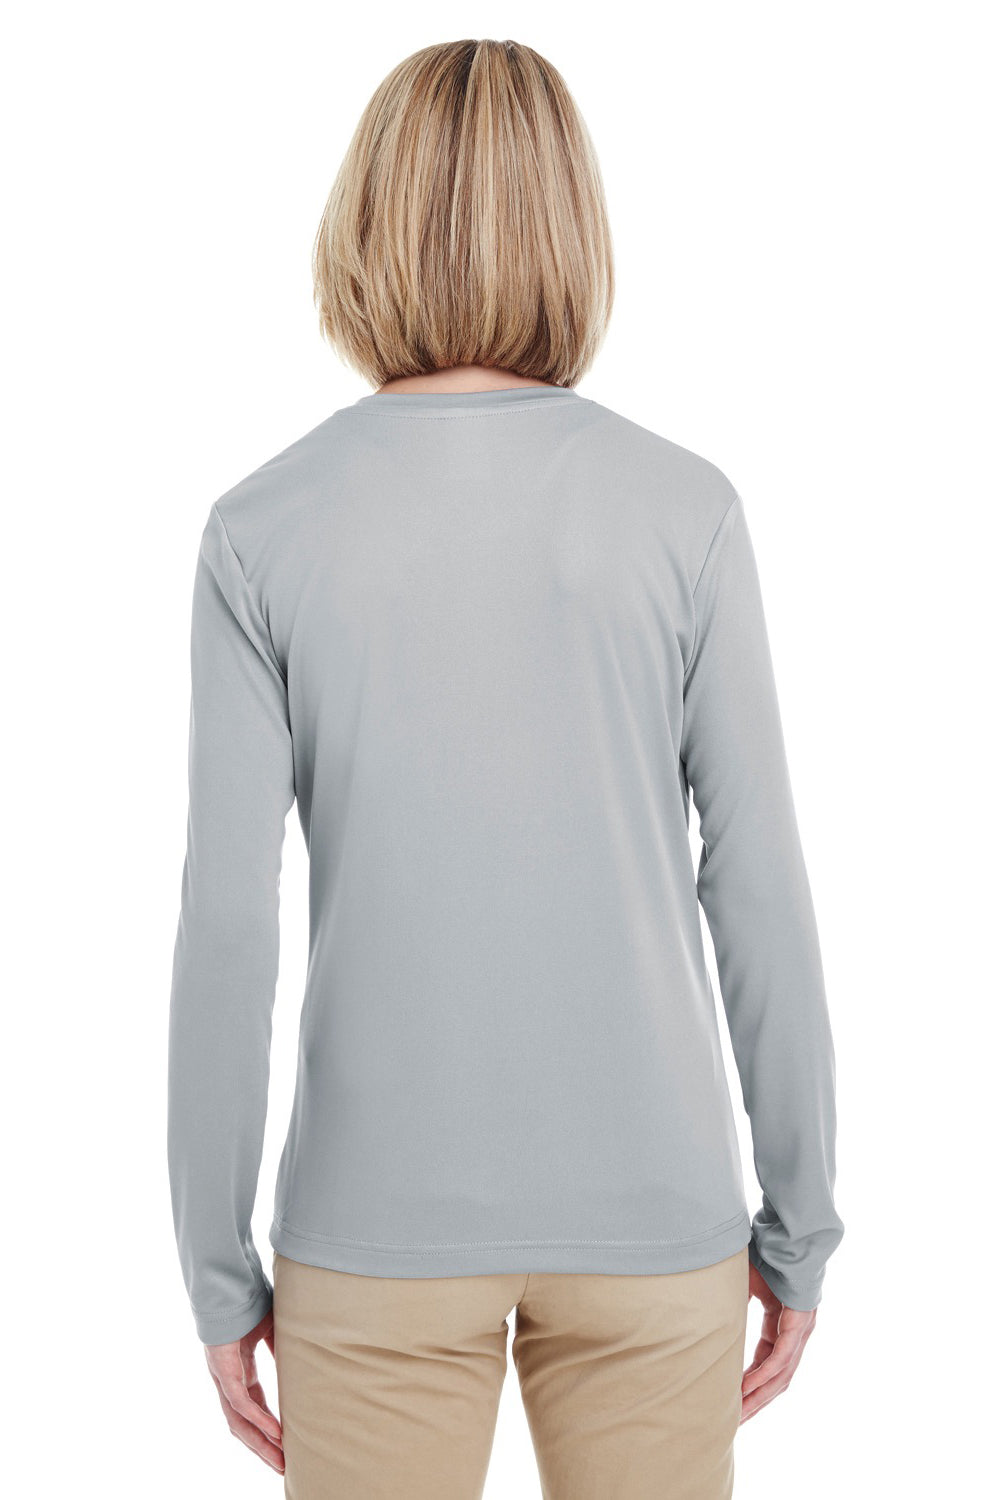 UltraClub 8622W Womens Cool & Dry Performance Moisture Wicking Long Sleeve Crewneck T-Shirt Grey Back